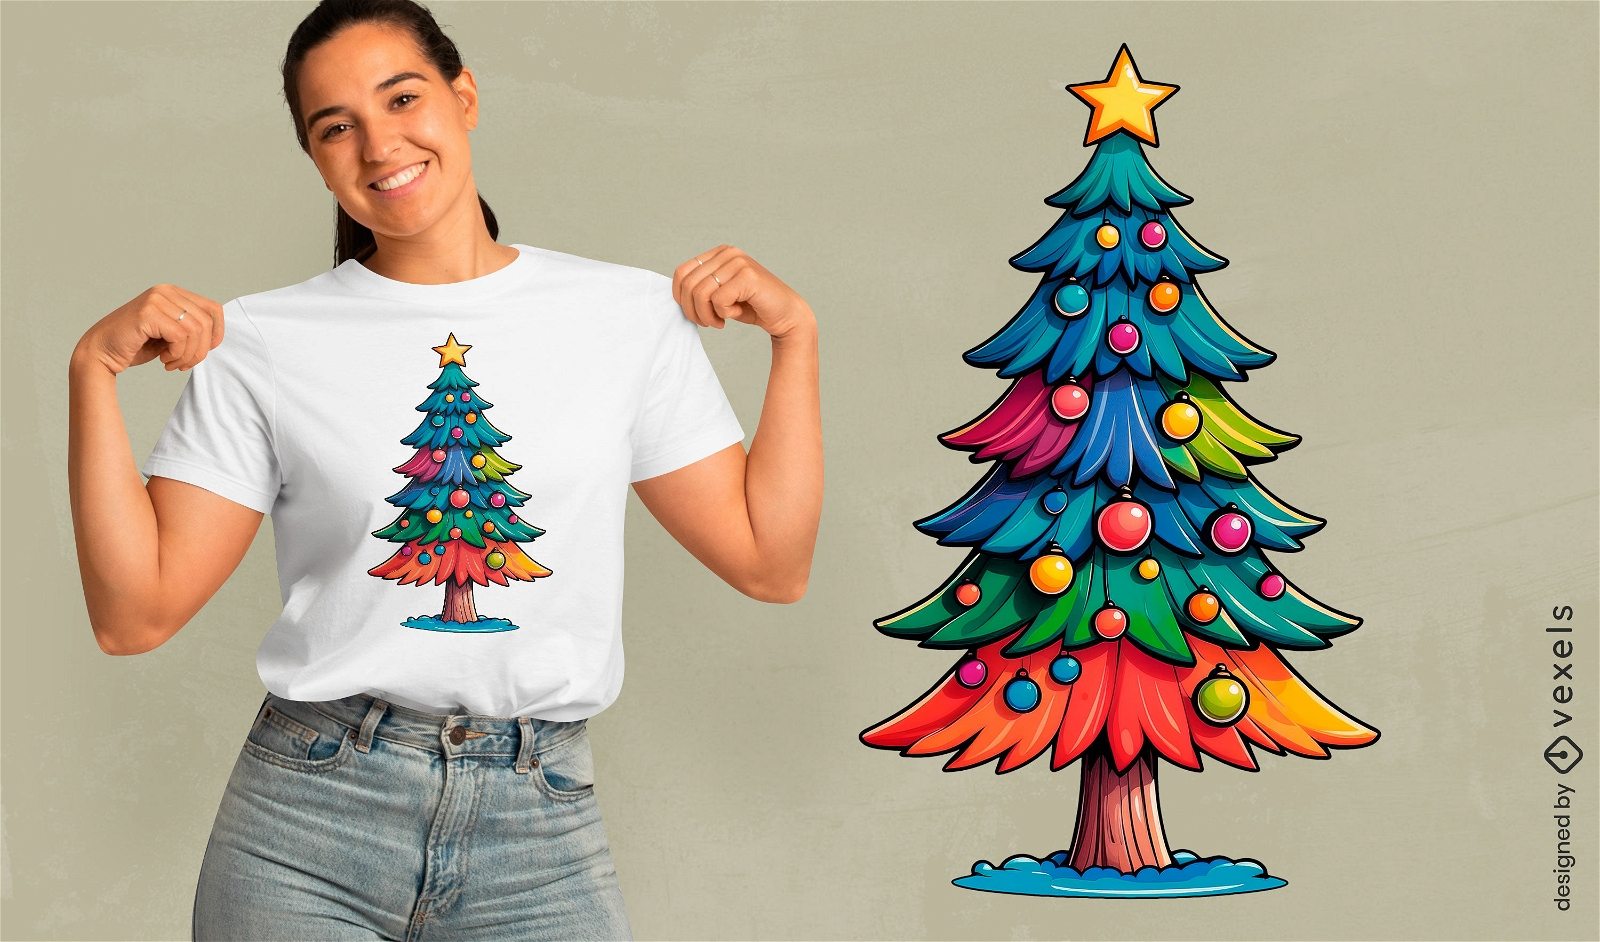 Festive Christmas tree t-shirt design